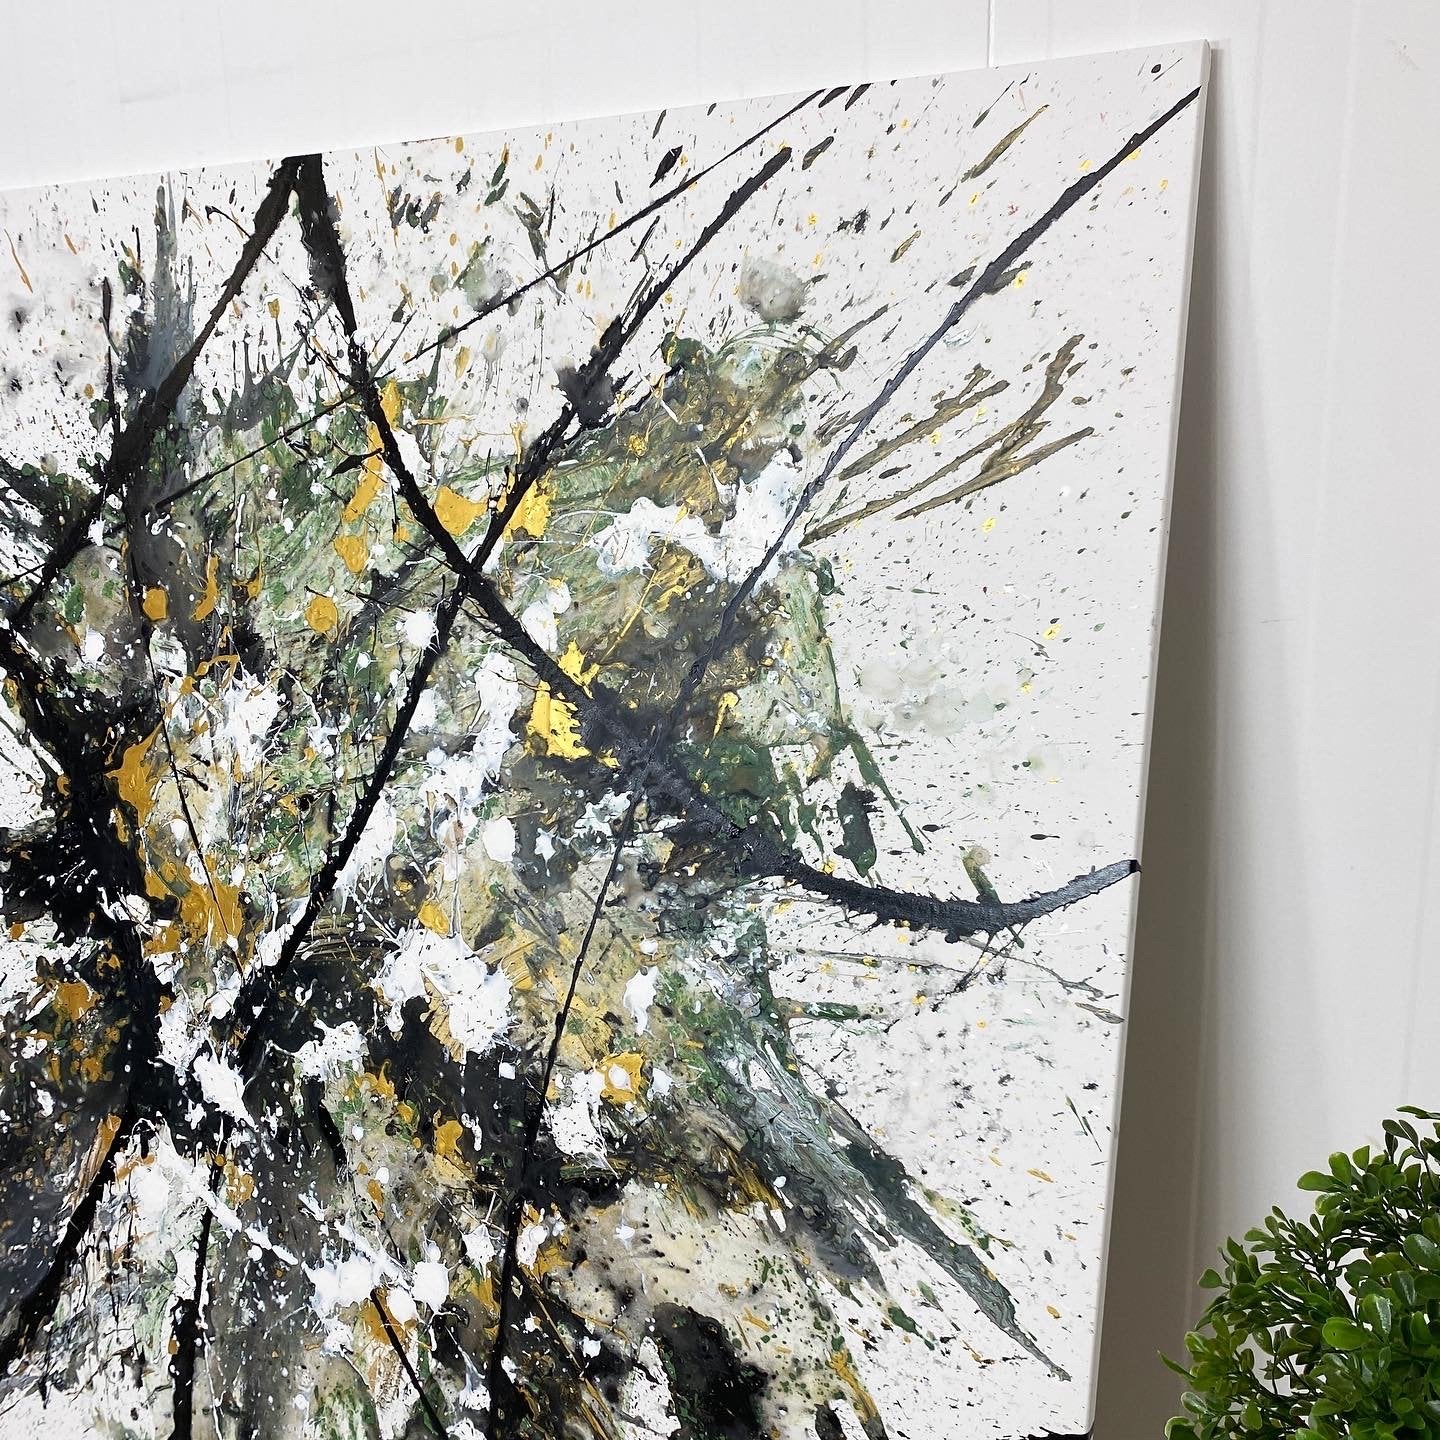 Painting: "Splash #14" 150 x 150 cm